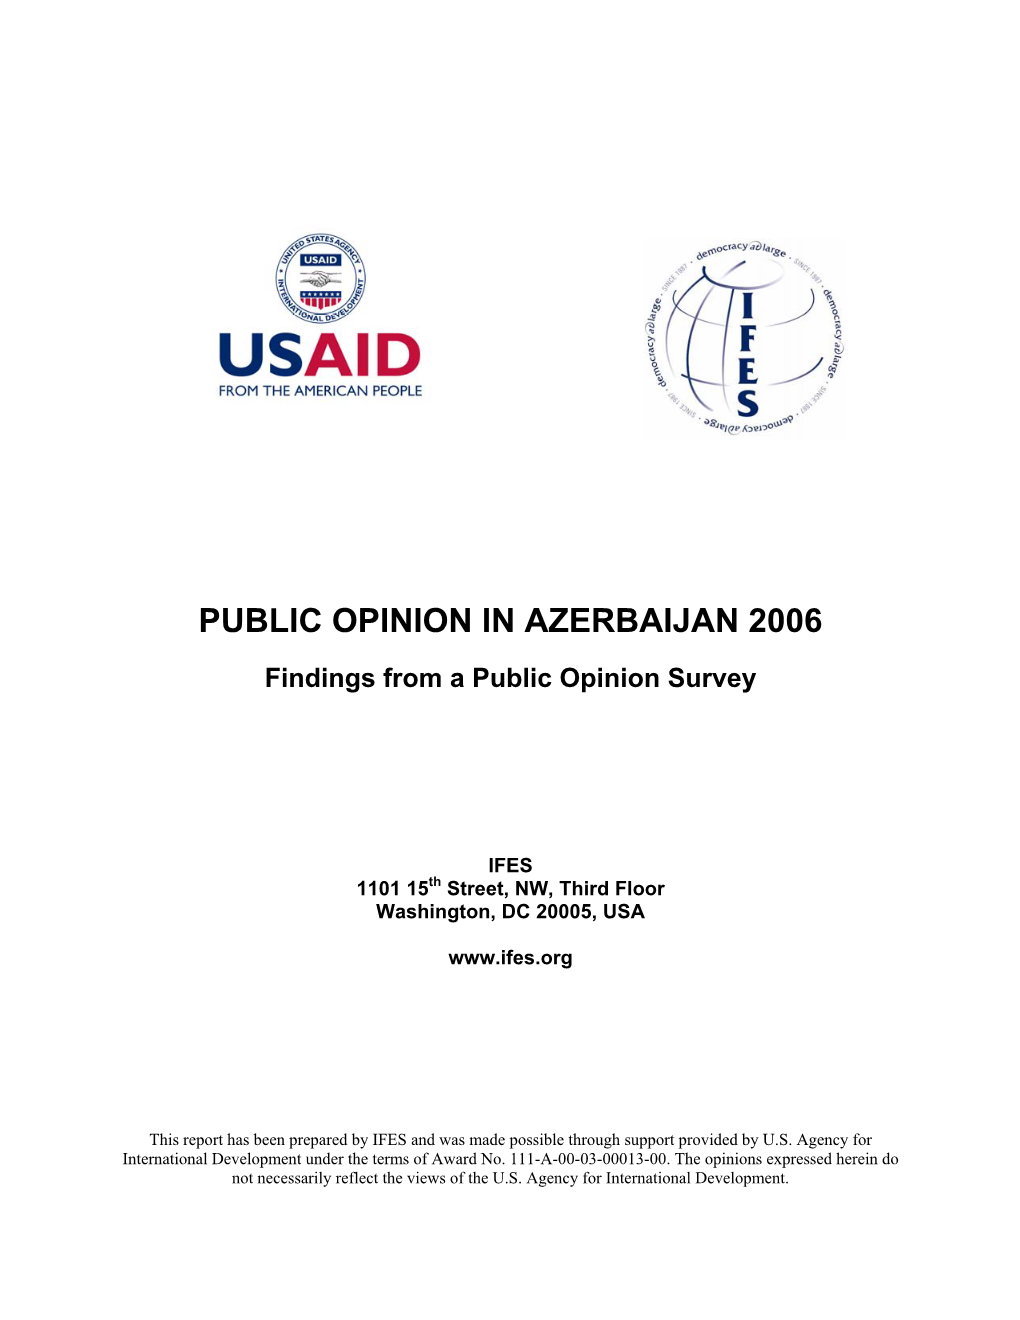 Public Opinion in Azerbaijan 2006